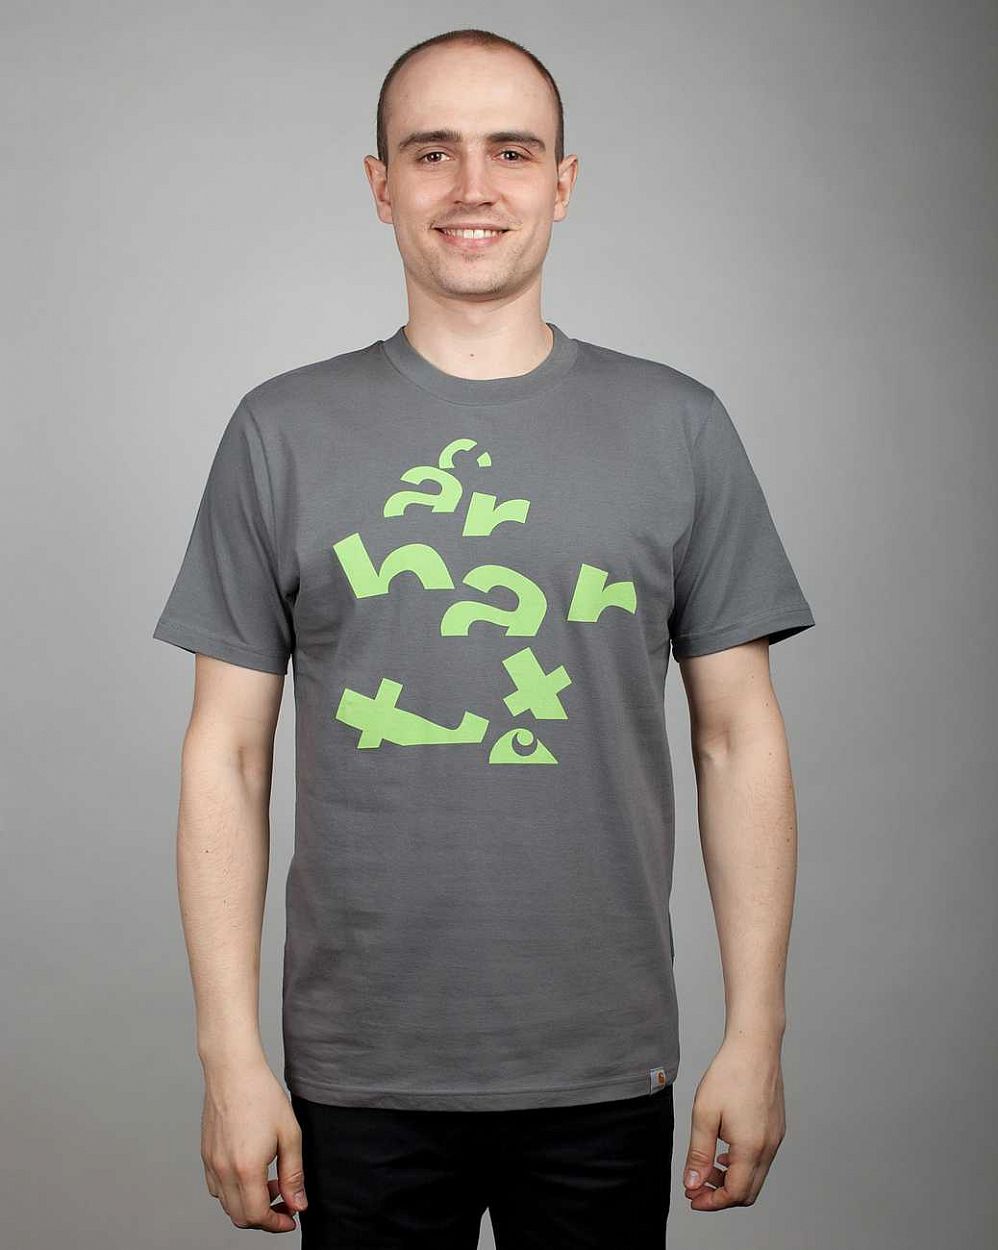 Футболка Carhartt S/S Slipstream T-shirt Metal Acid Green отзывы